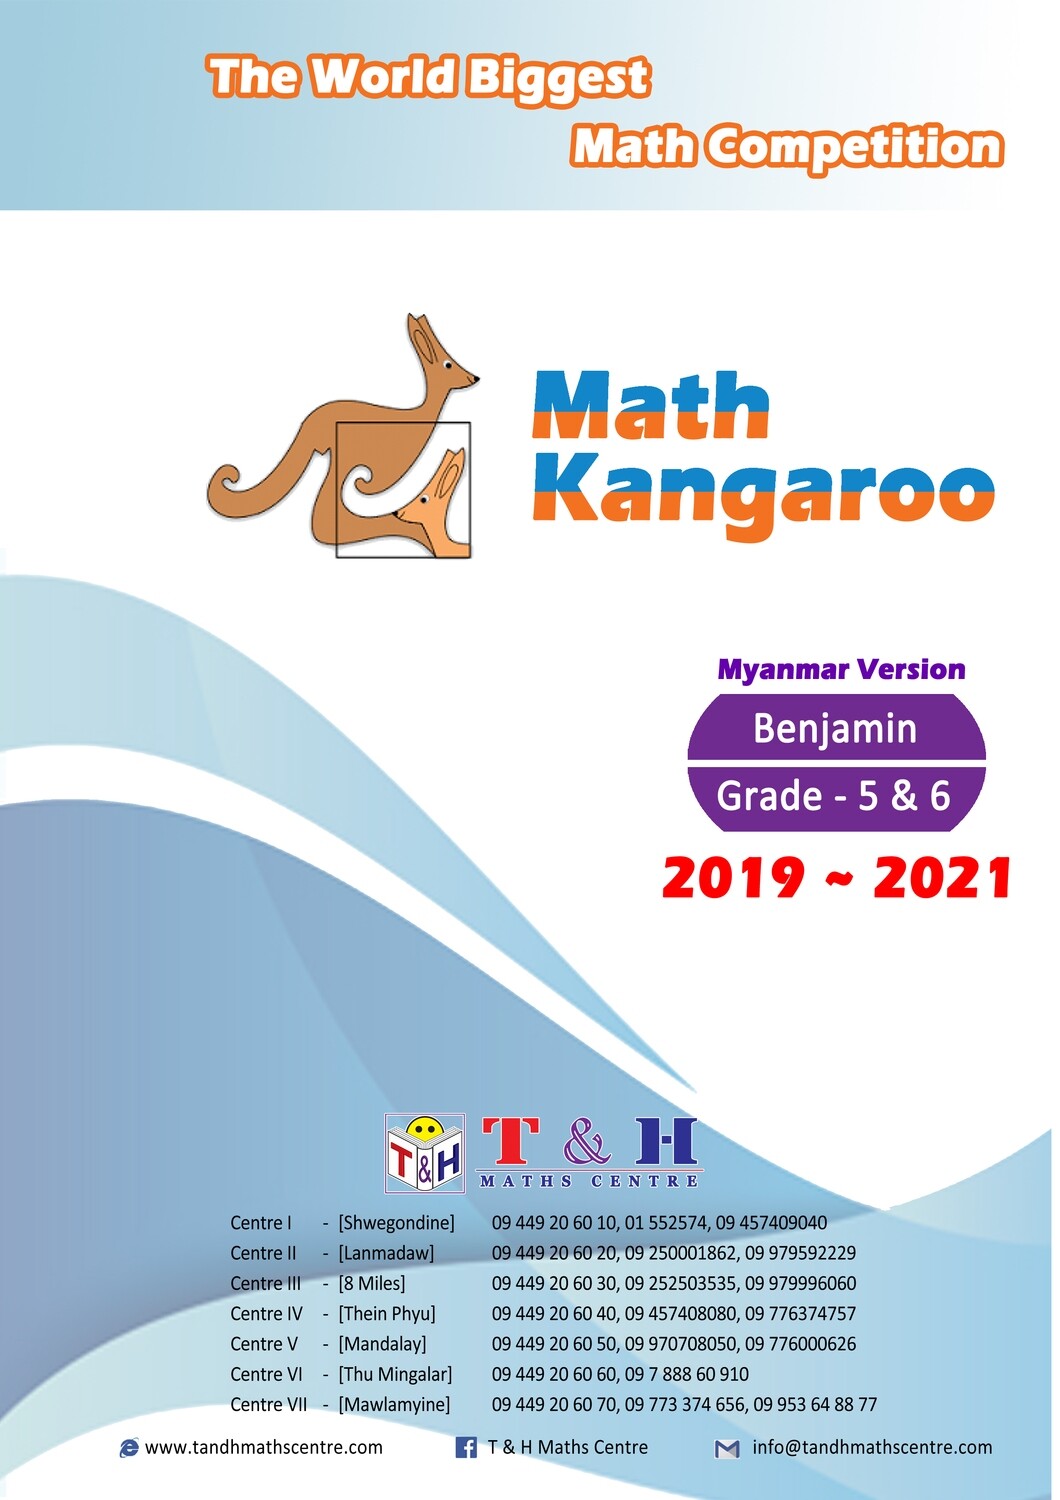 Kangaroo (Benjamin) Grade 5 & 6 (2019 to 2021)